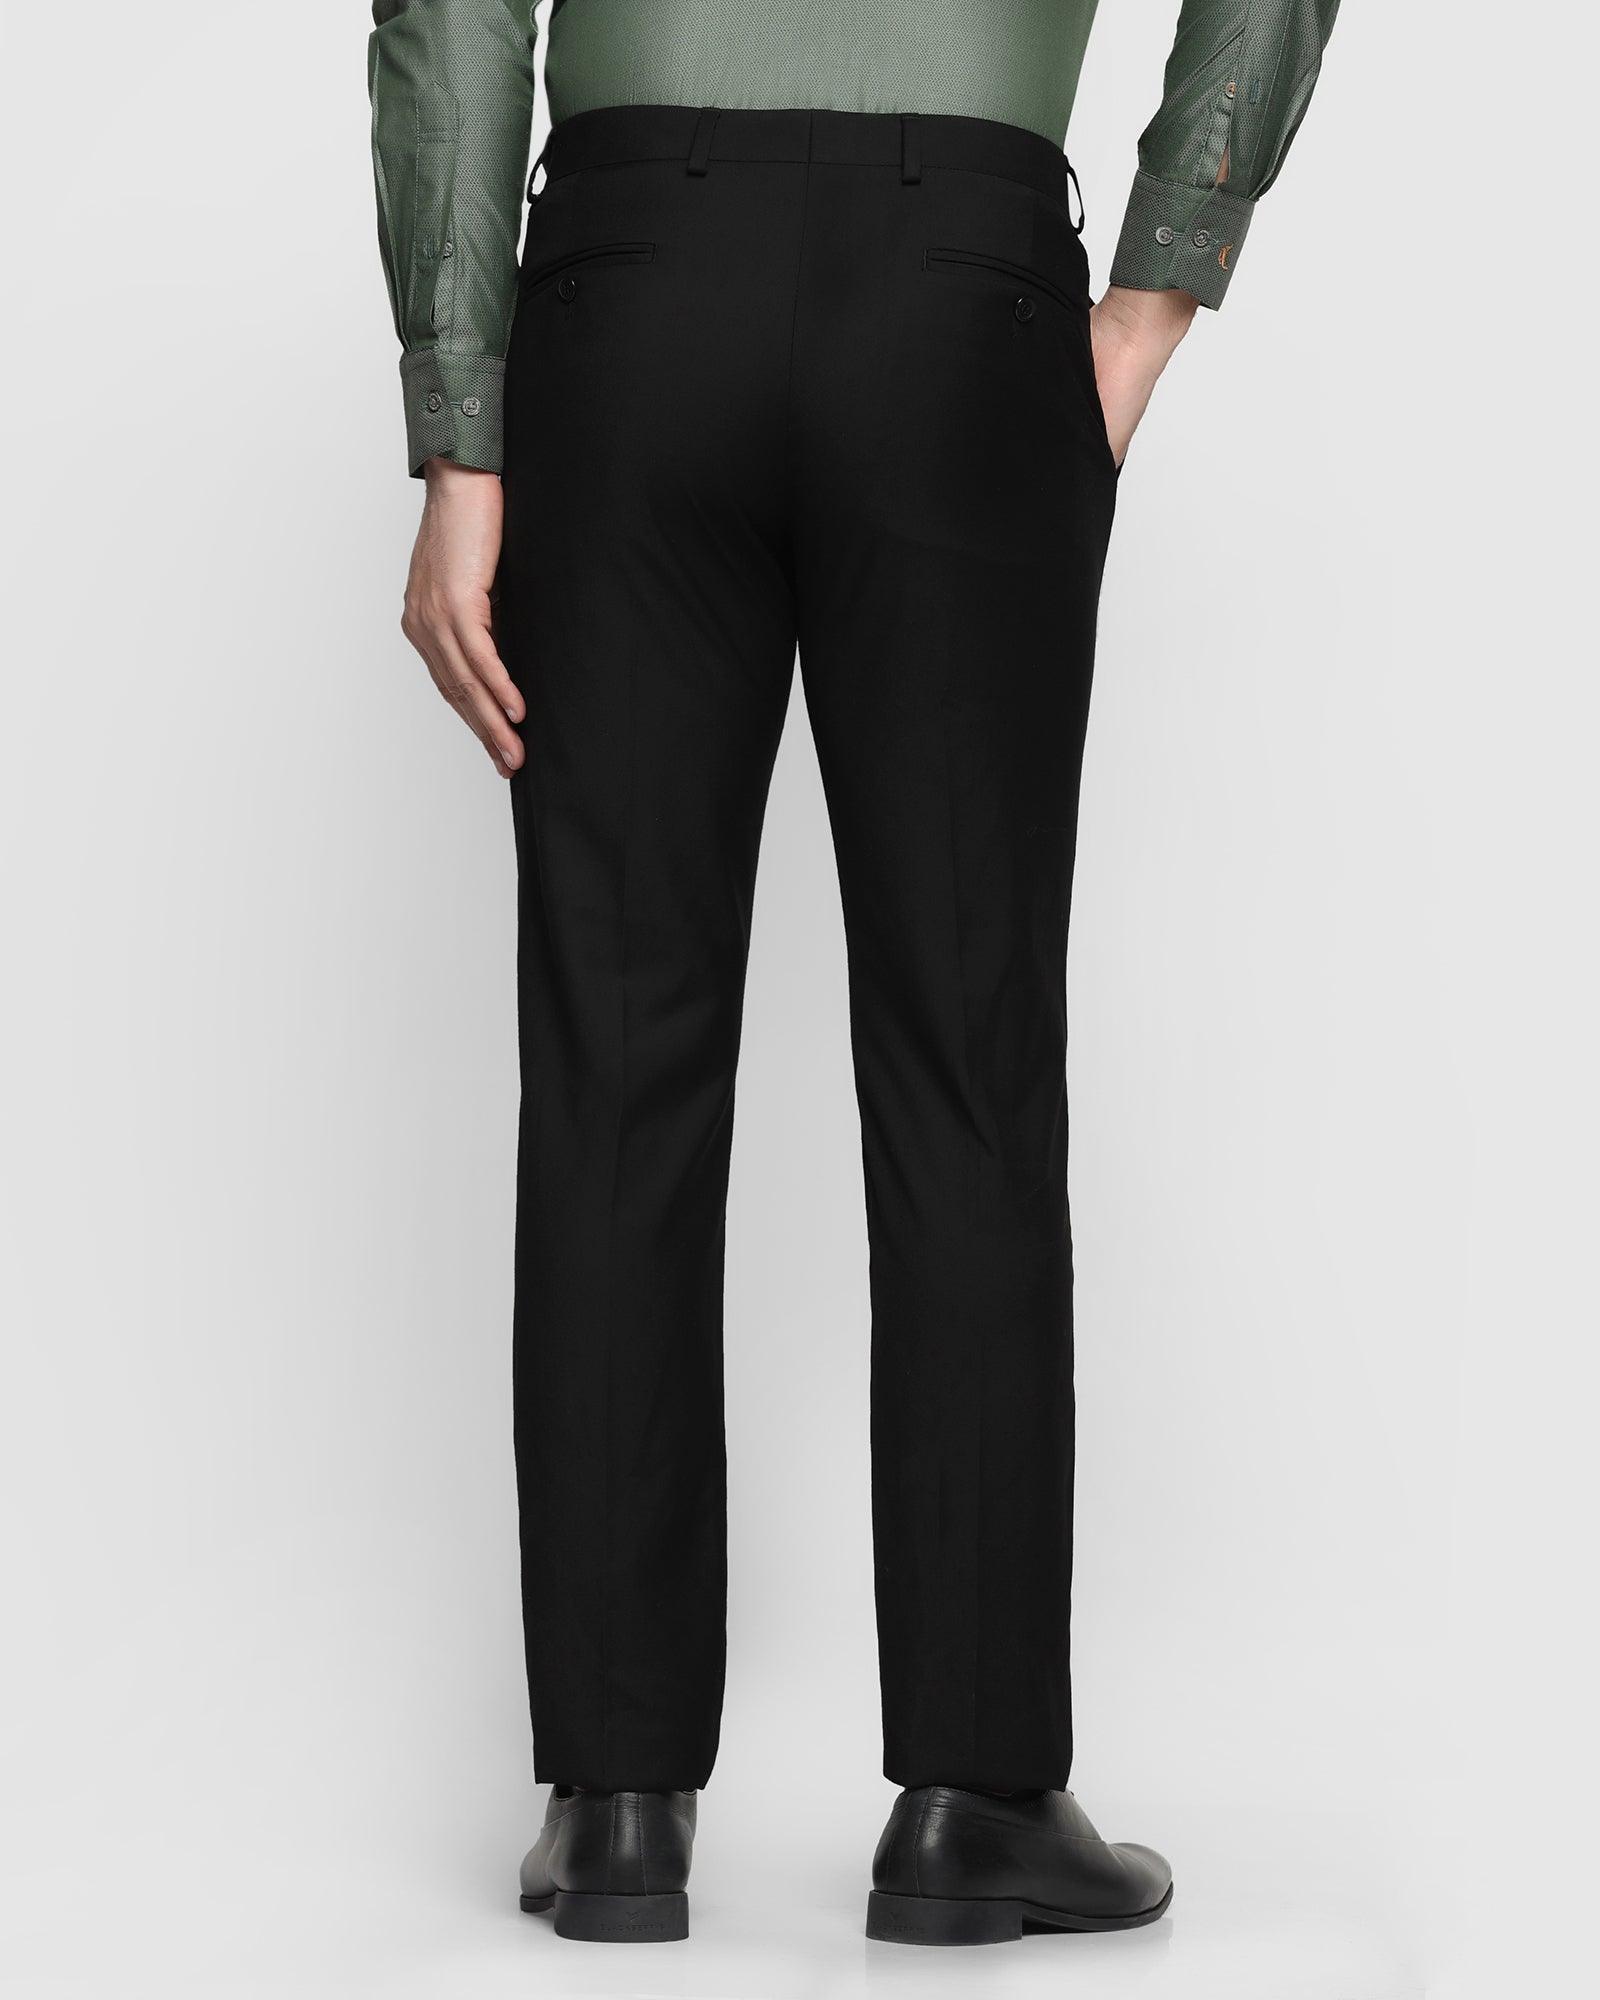 Black Pantsuit for Women, Black Formal Pants Suit for Women, Black Pantsuit  Set With Trousers and Blazer Single Breasted, Formal Womens Wear - Etsy  Norway